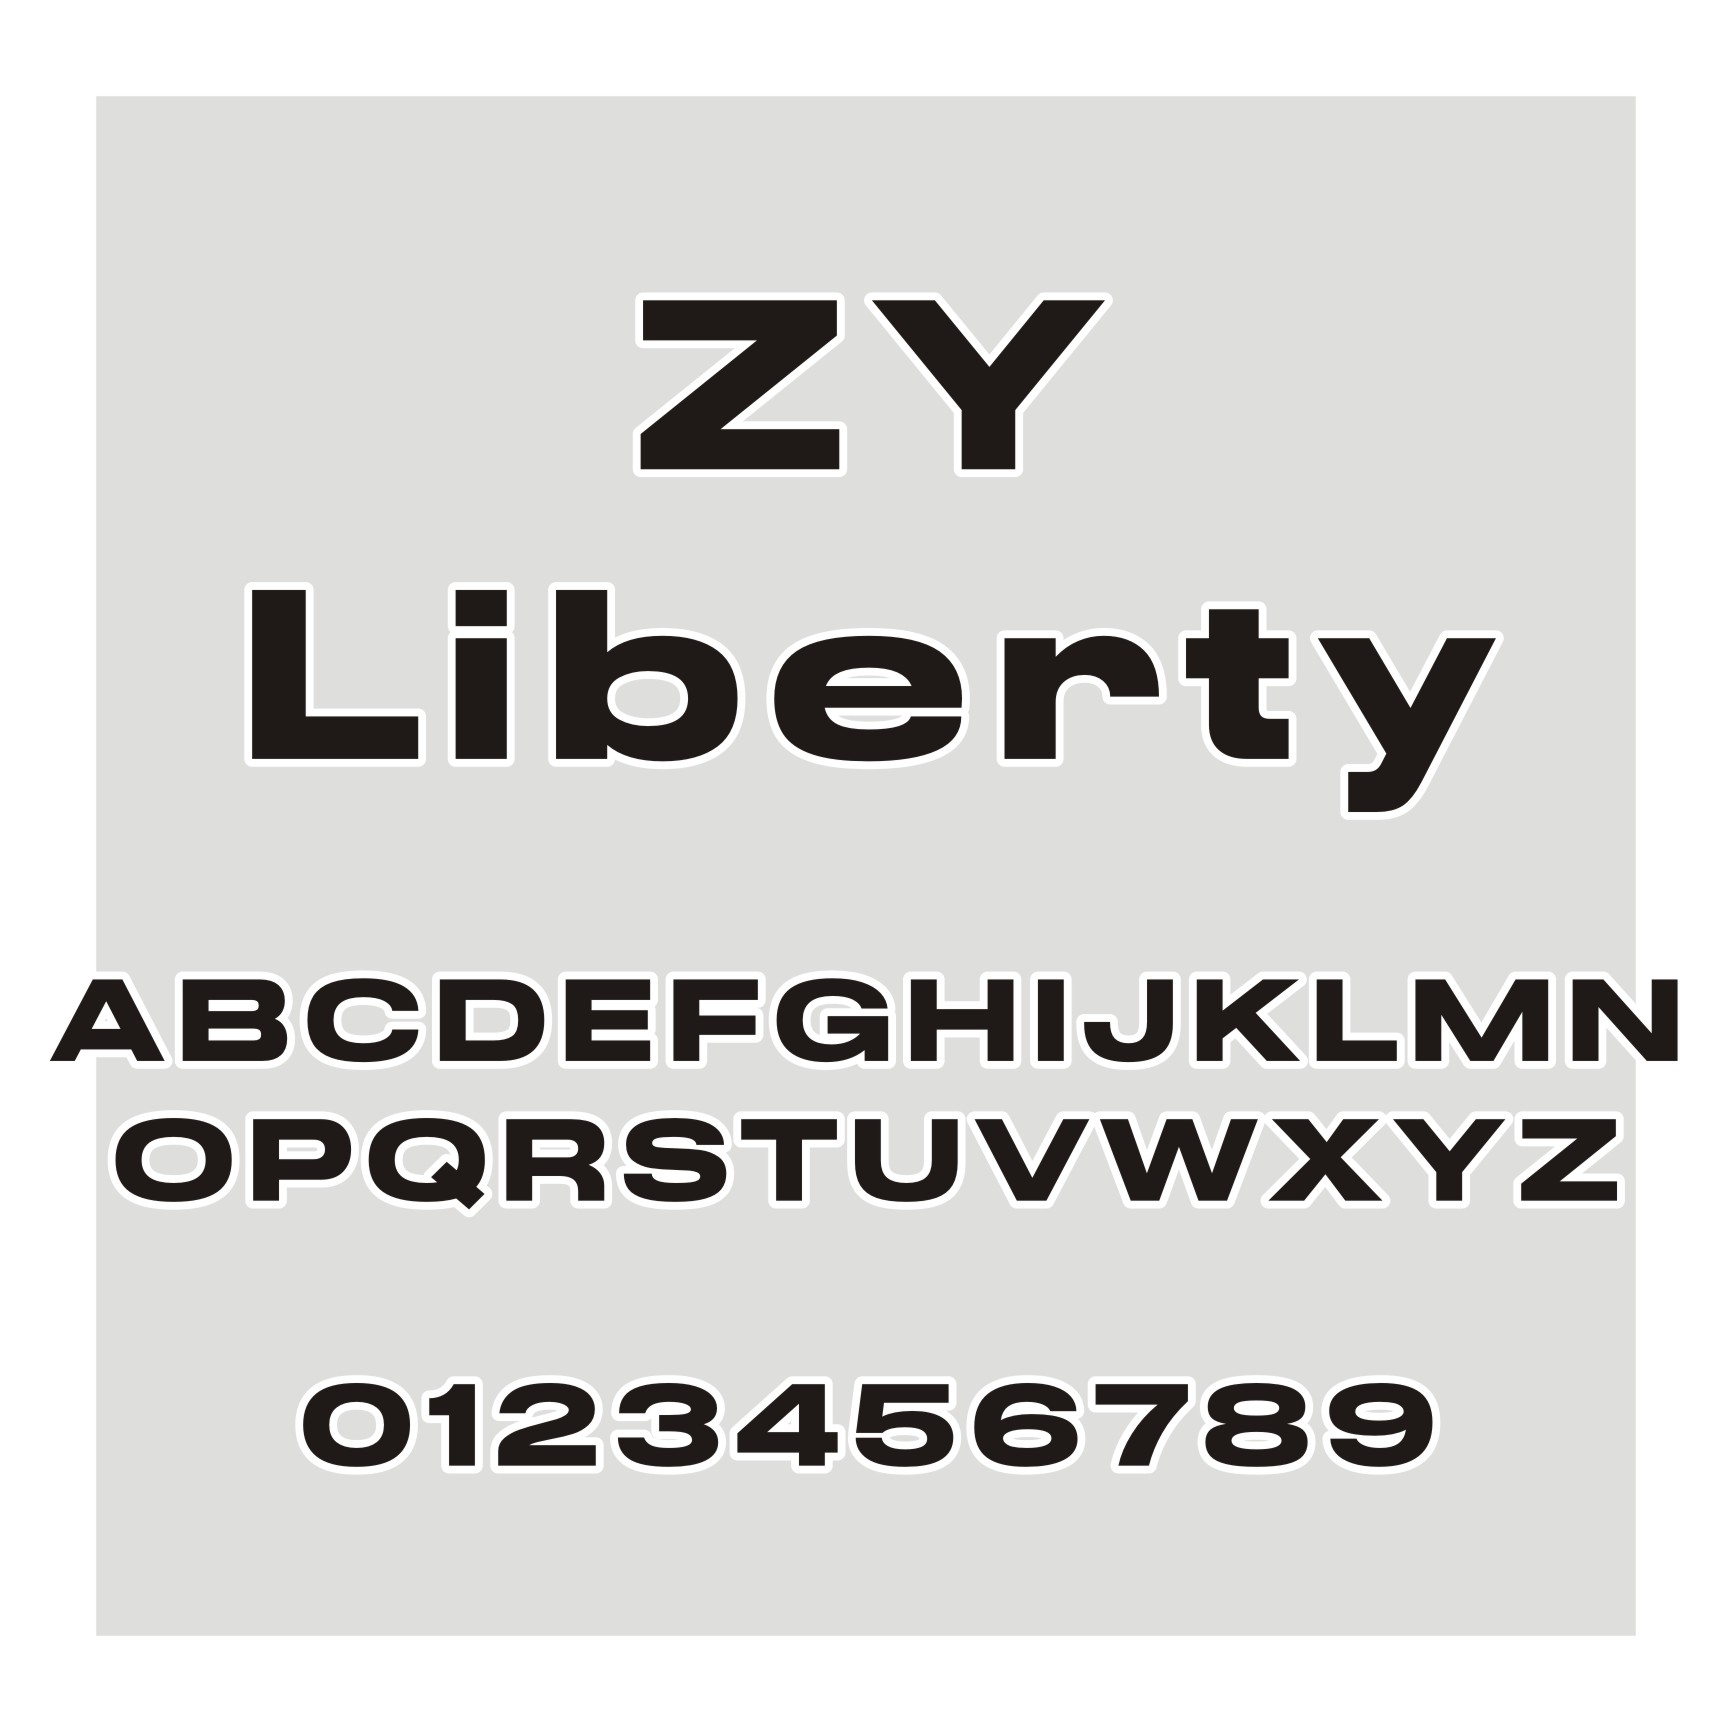 ZY Liberty